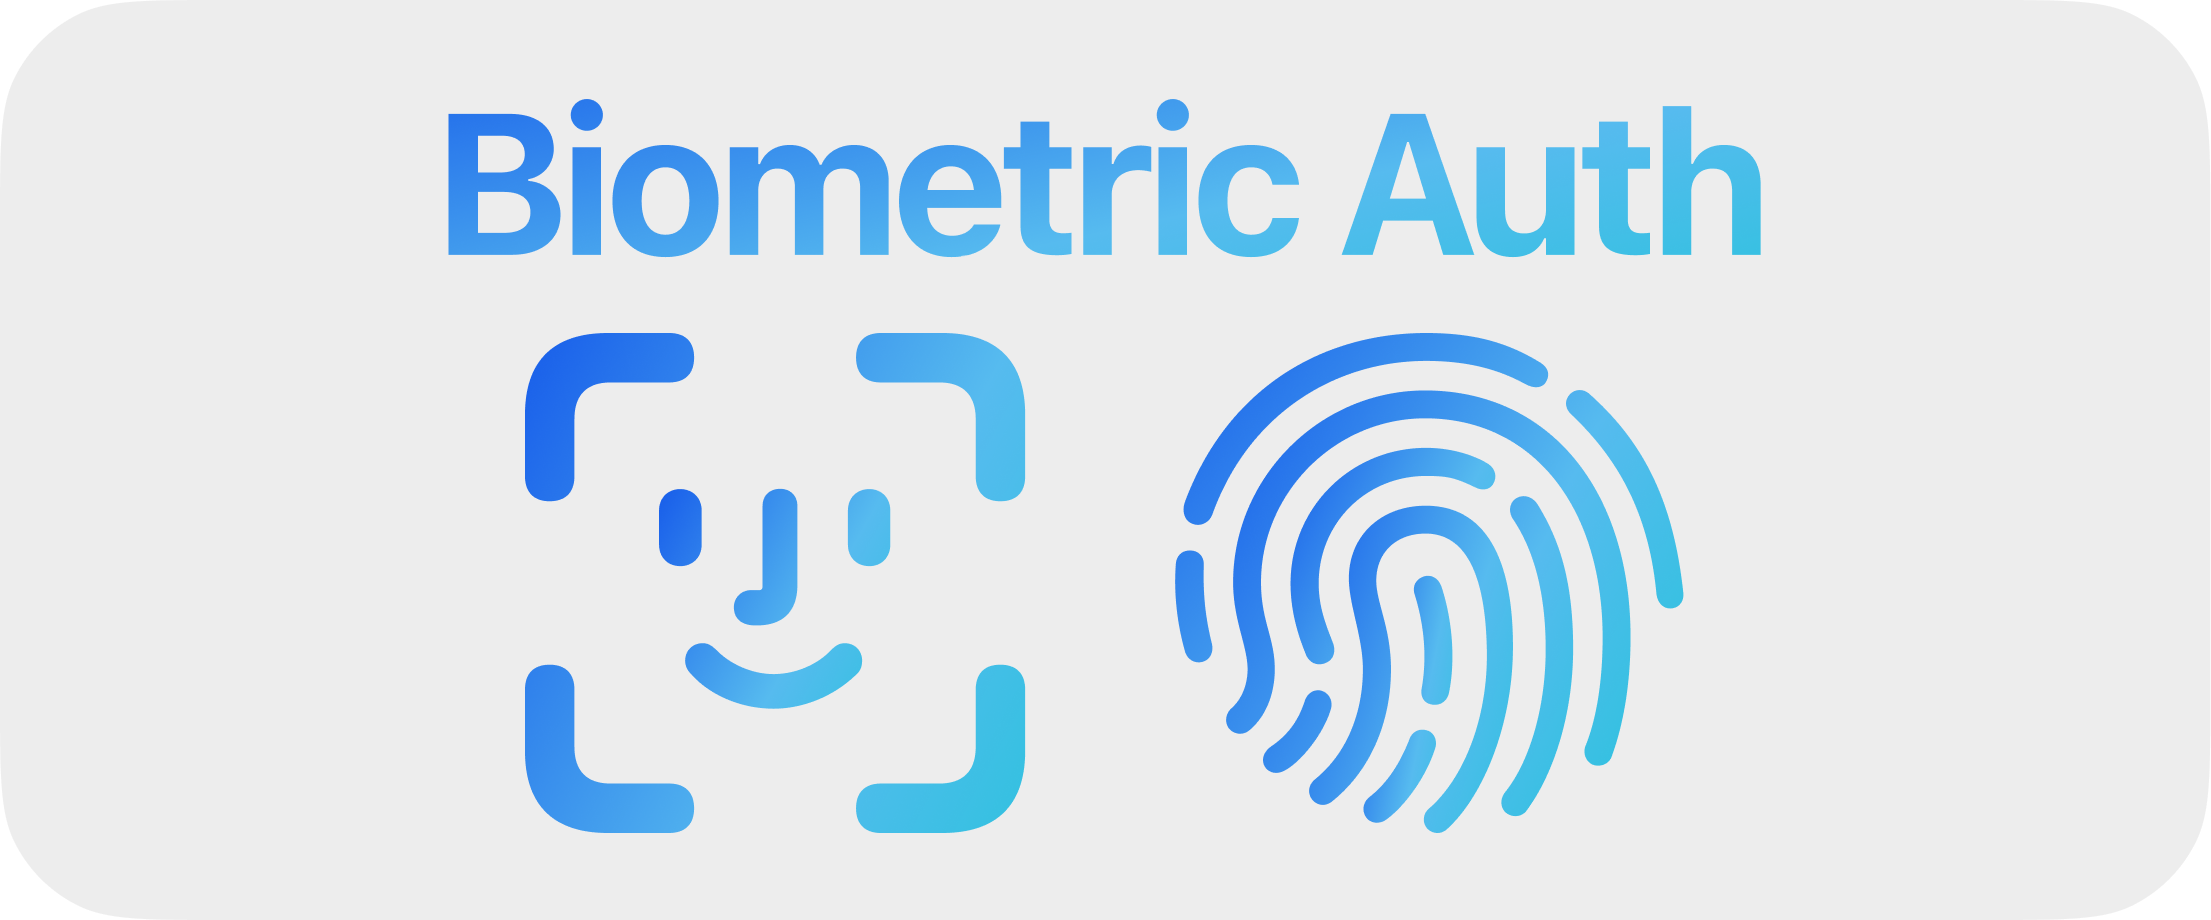 Introducing Biometric Auth